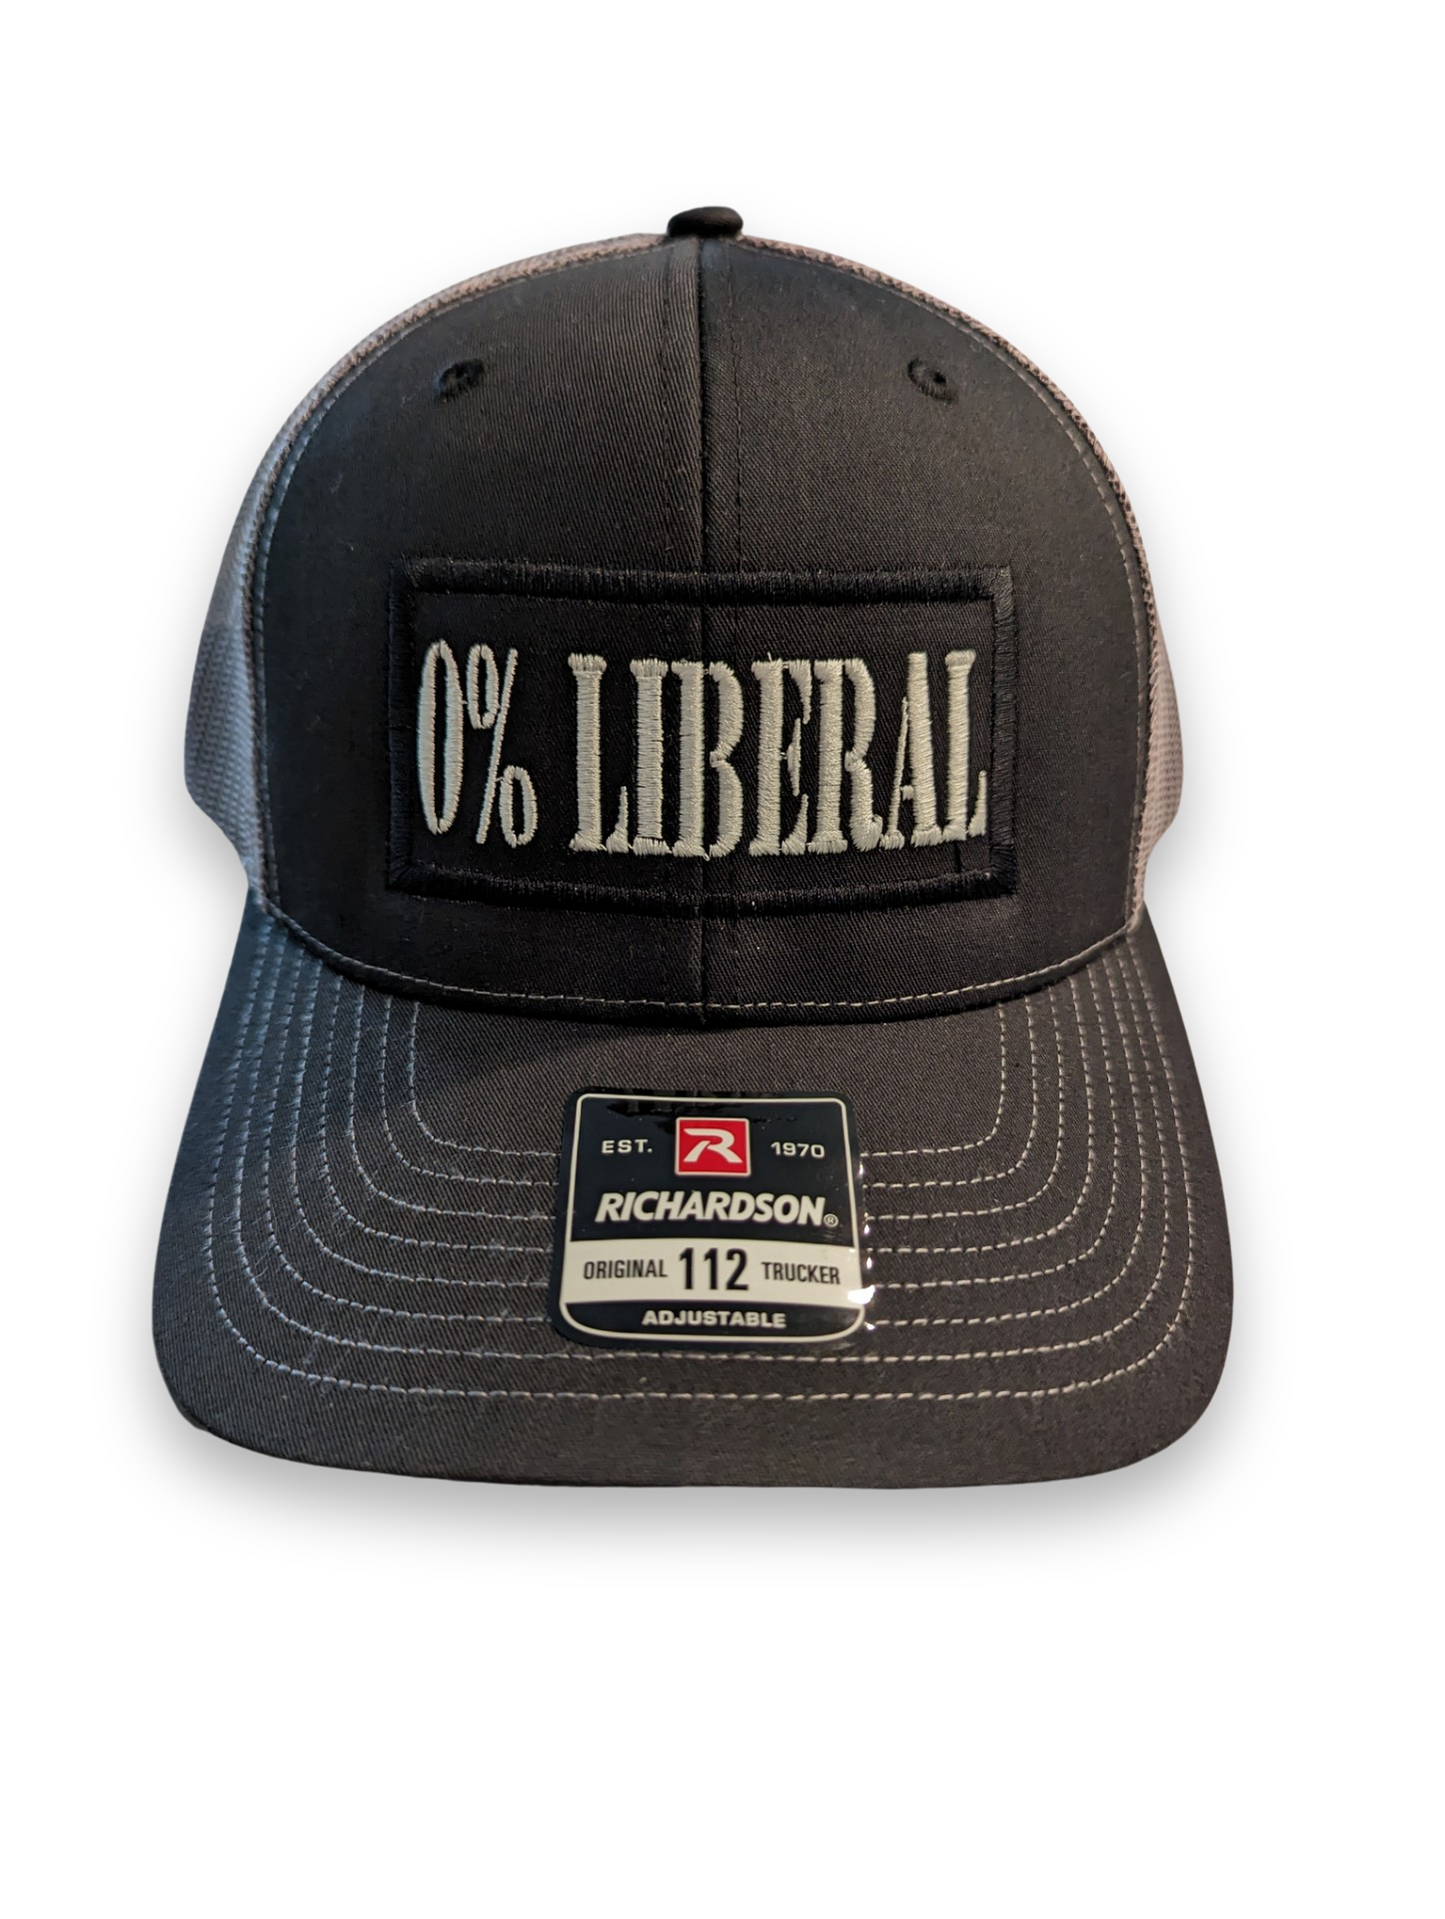 0% Liberal snapback hat